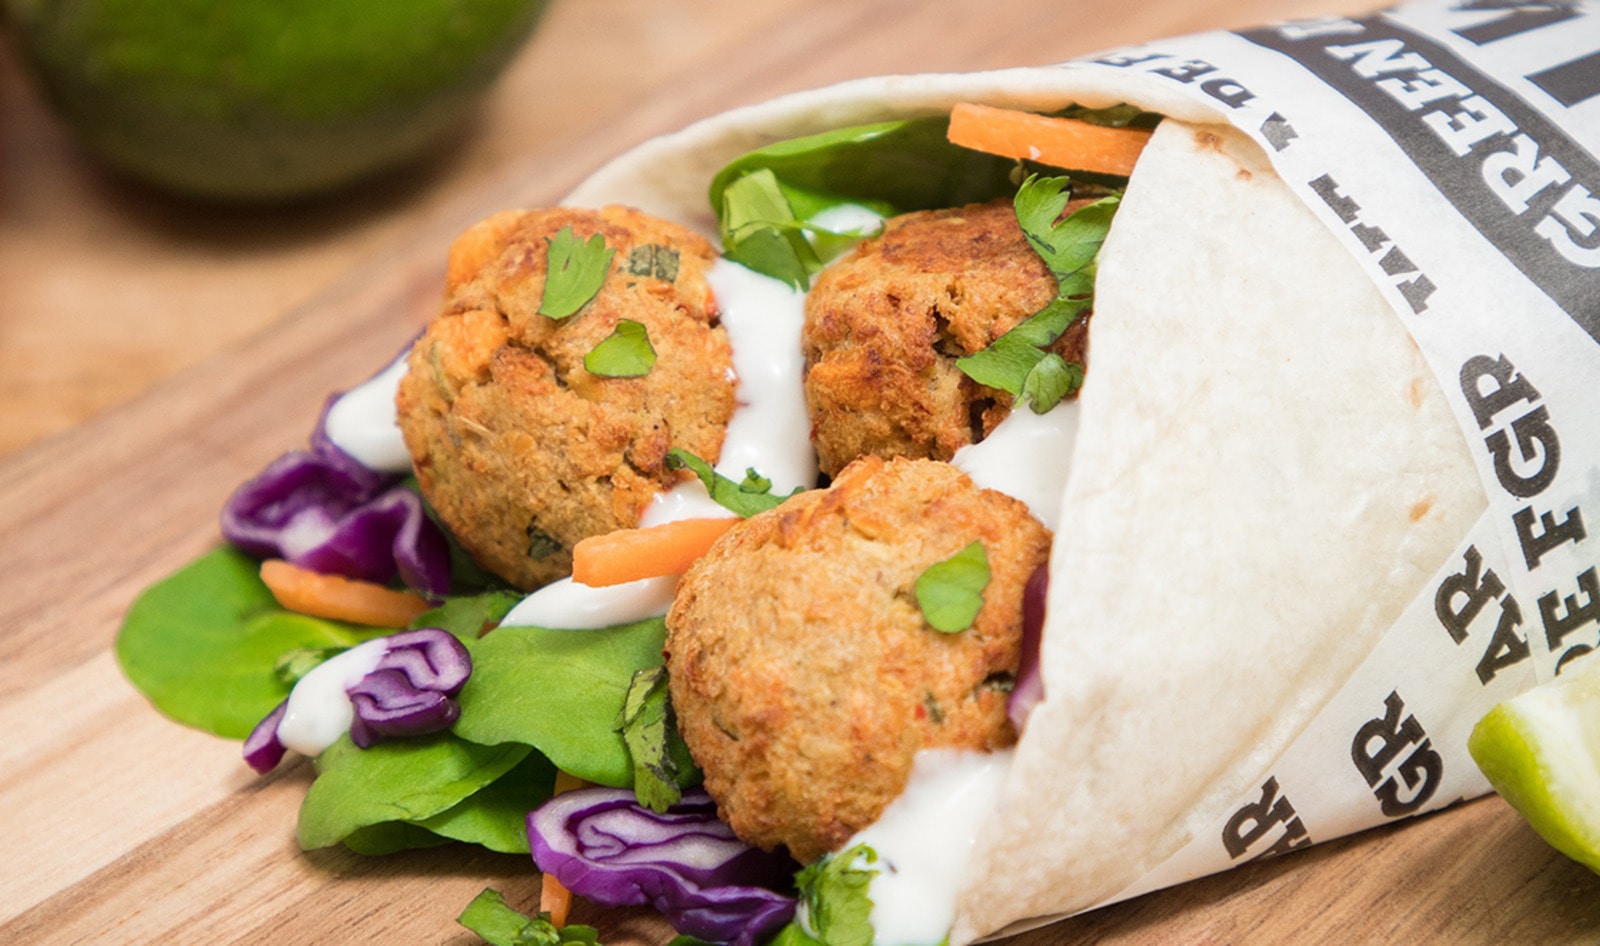 Vegan Soccer Team Debuts Plant-Based Lunches For Kids